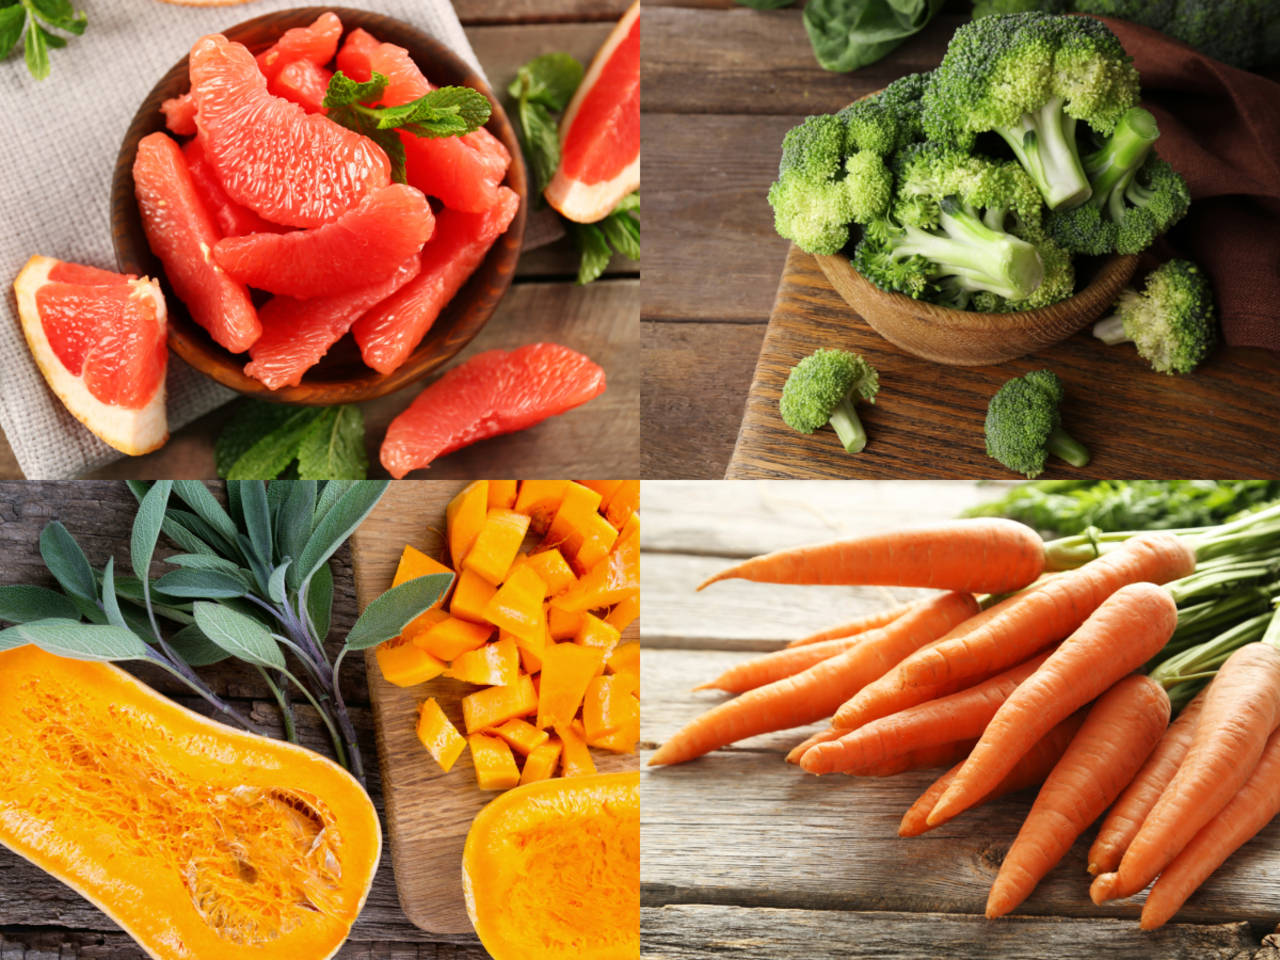 food sources of Vitamin A: Grapefruit, Broccoli, Carrots, Papaya